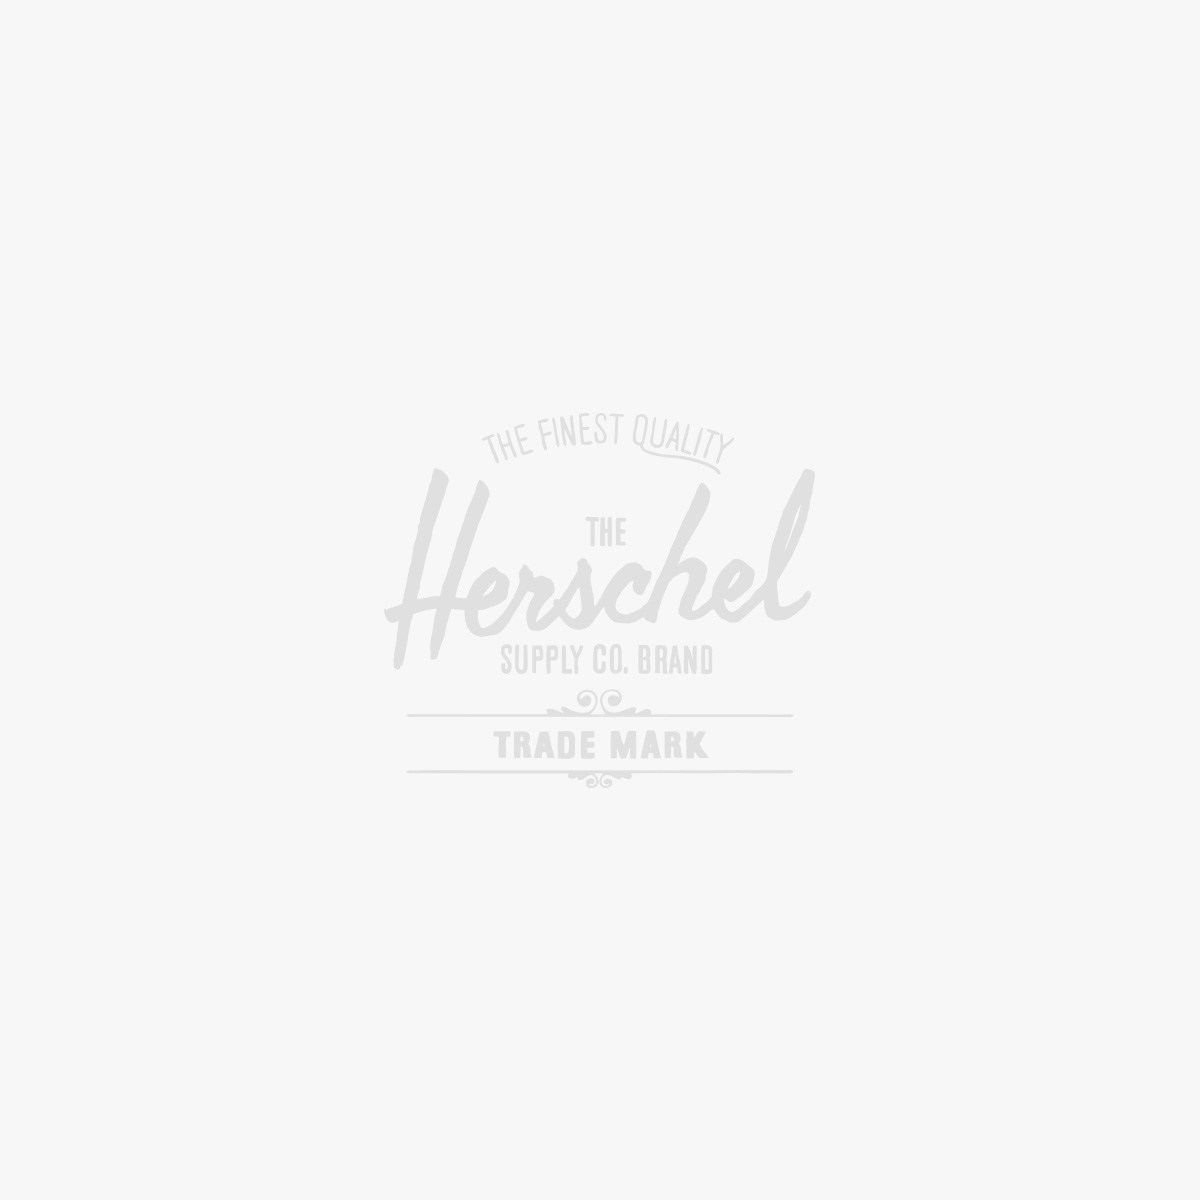 Pocket Tee Shirt | Herschel Supply Co.